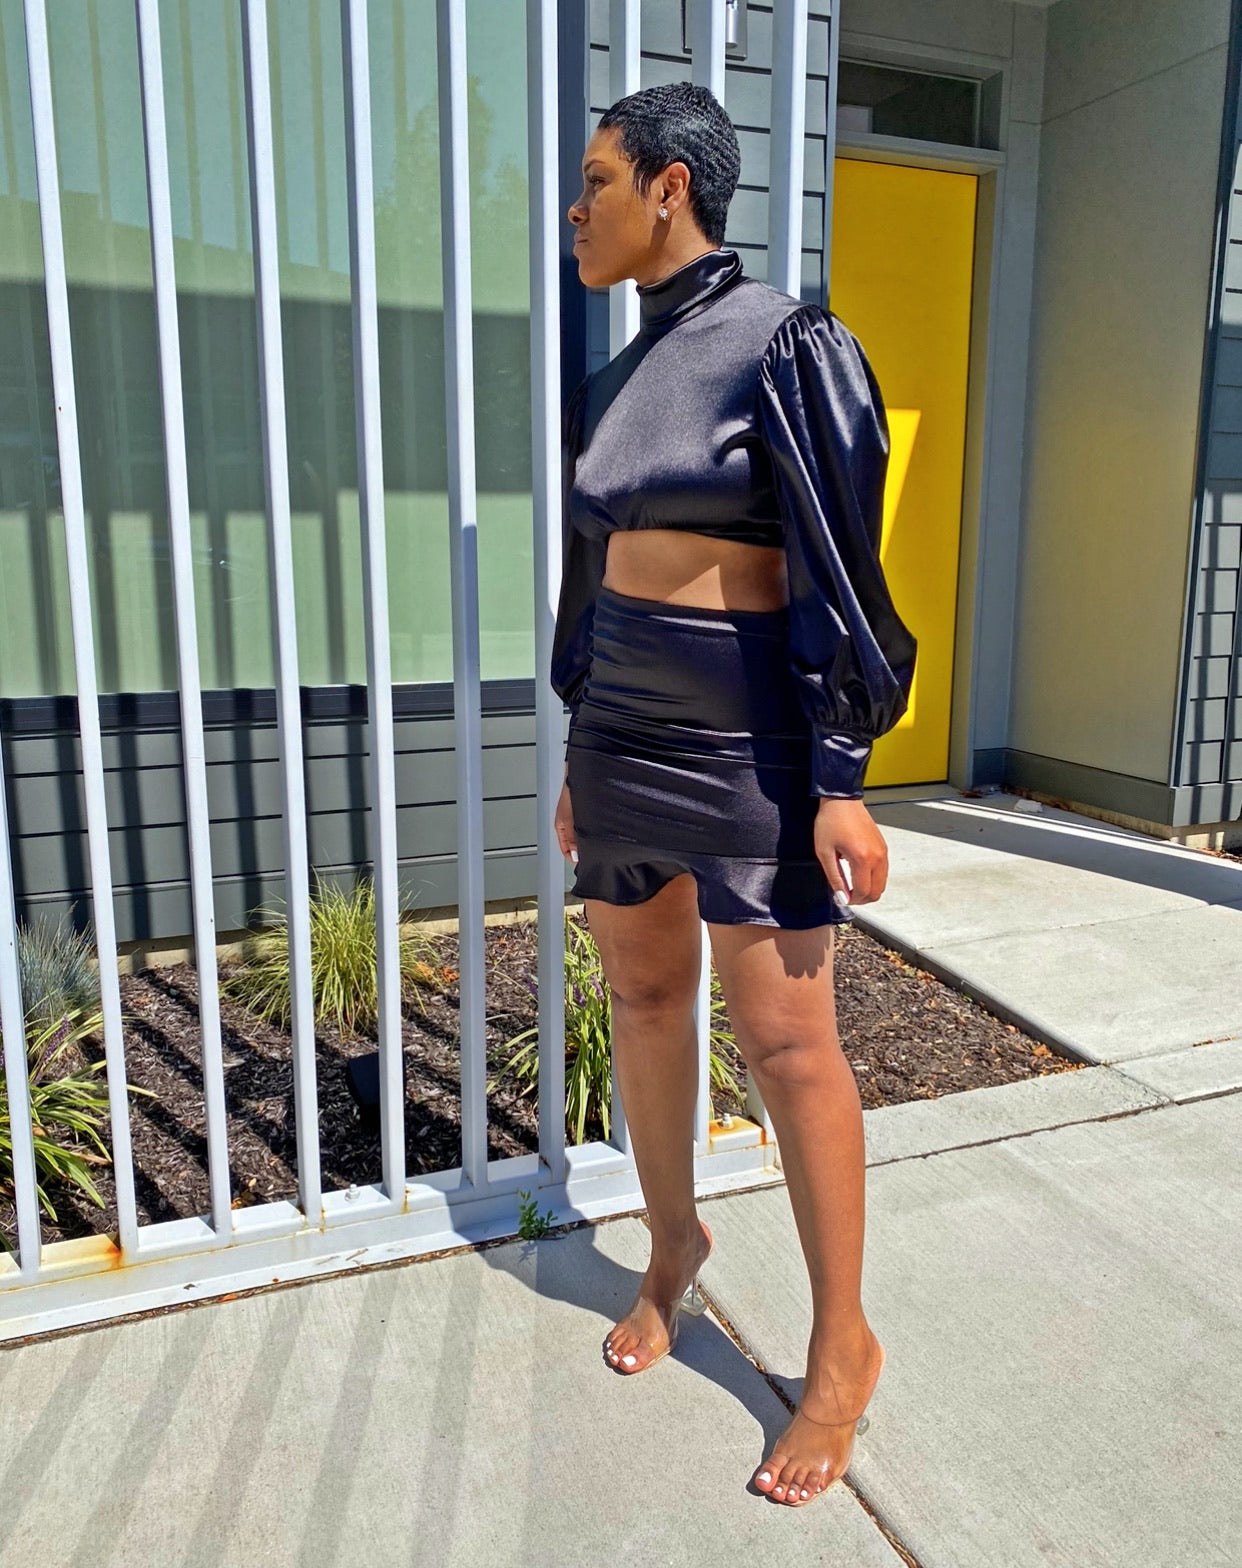 Krishana| Two Piece Skirt Set